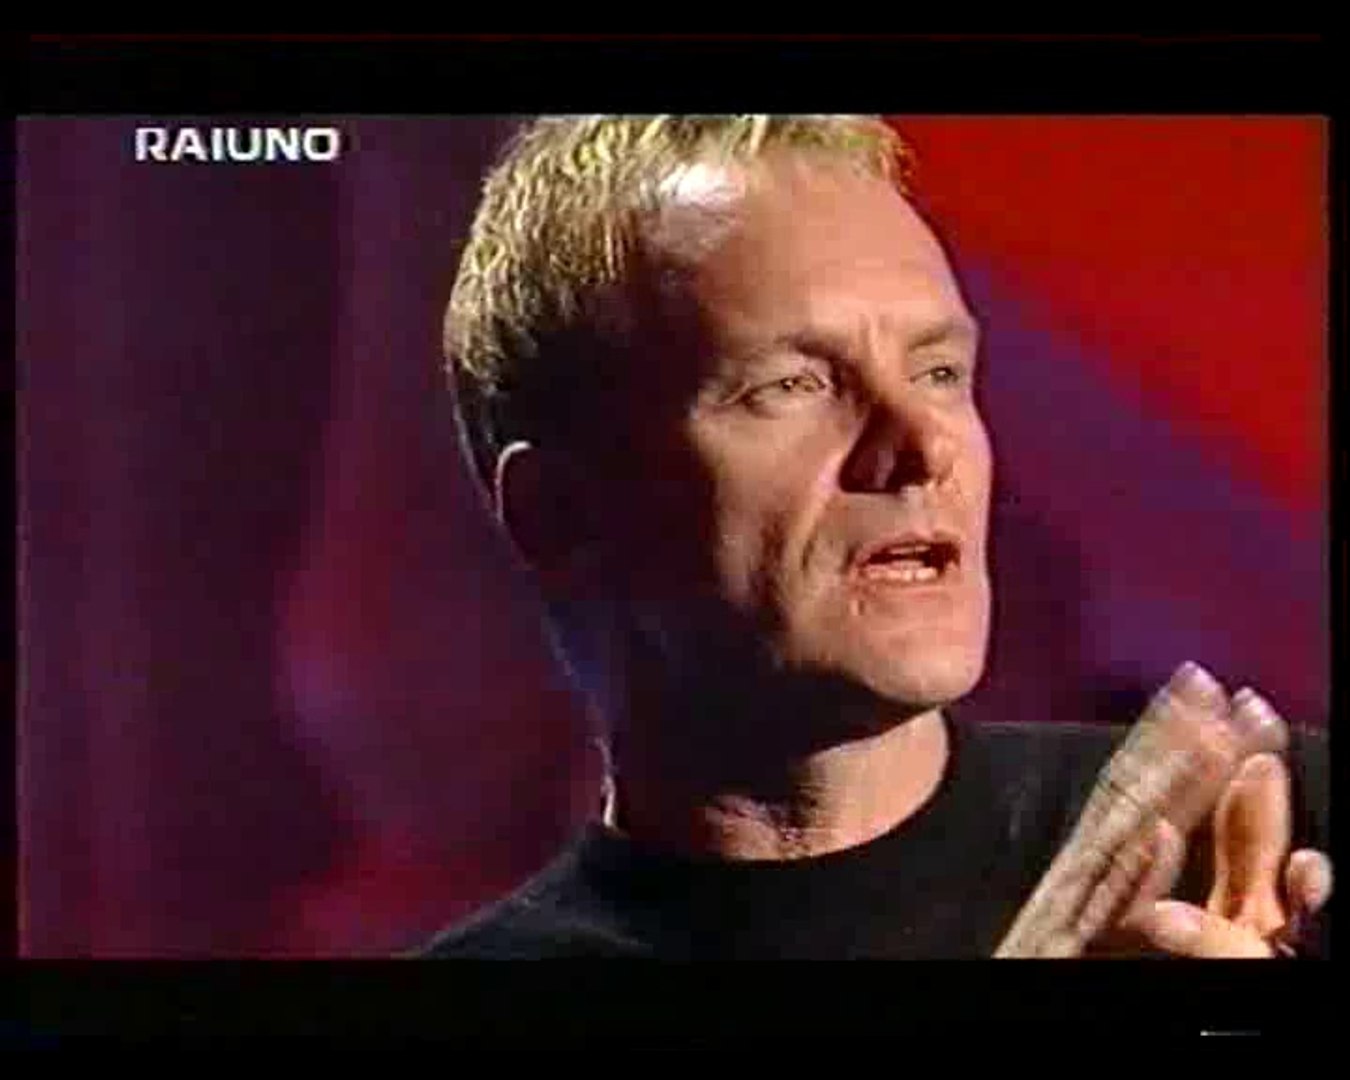 Sting & Cheb Mami - Desert Rose @Sanremo 2000 - Video Dailymotion